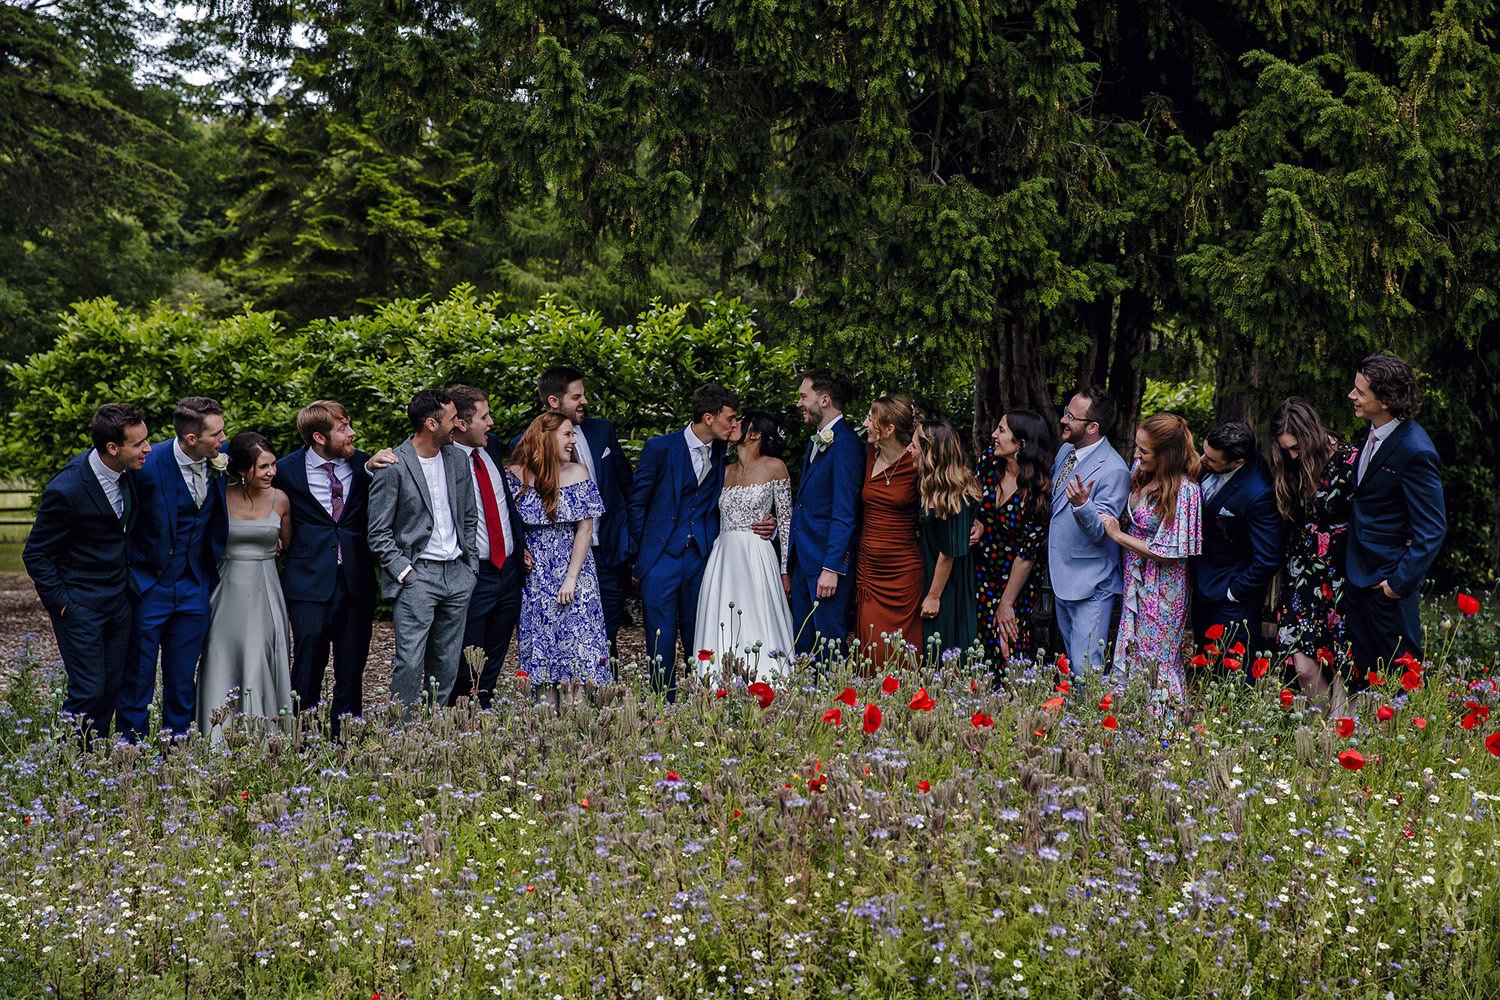 Group photo in Barrington Hall meadow